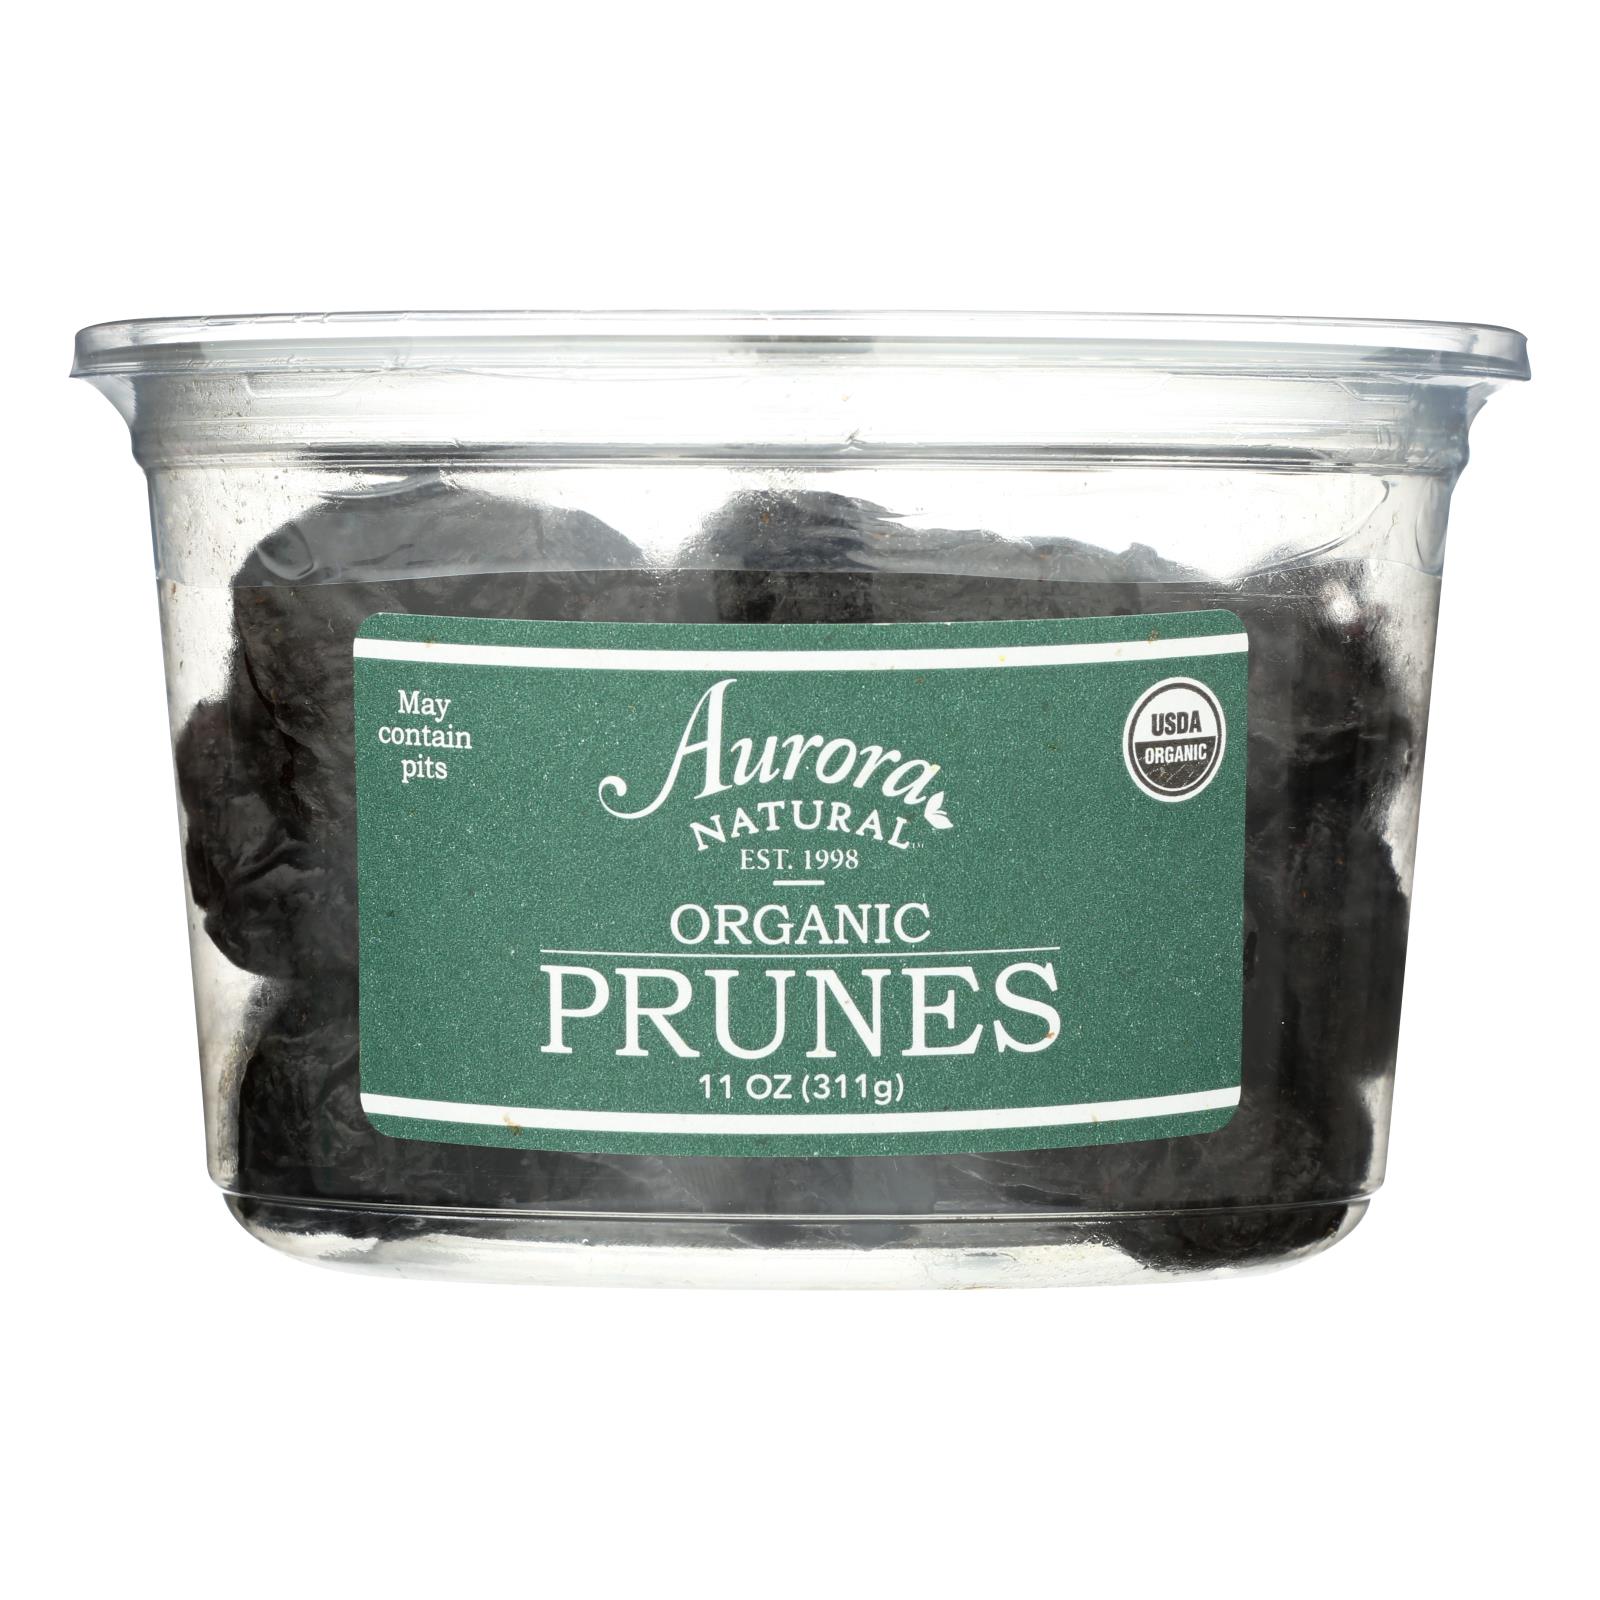 Aurora Natural Products - Organic Prunes - 12개 묶음상품 - 11 oz.